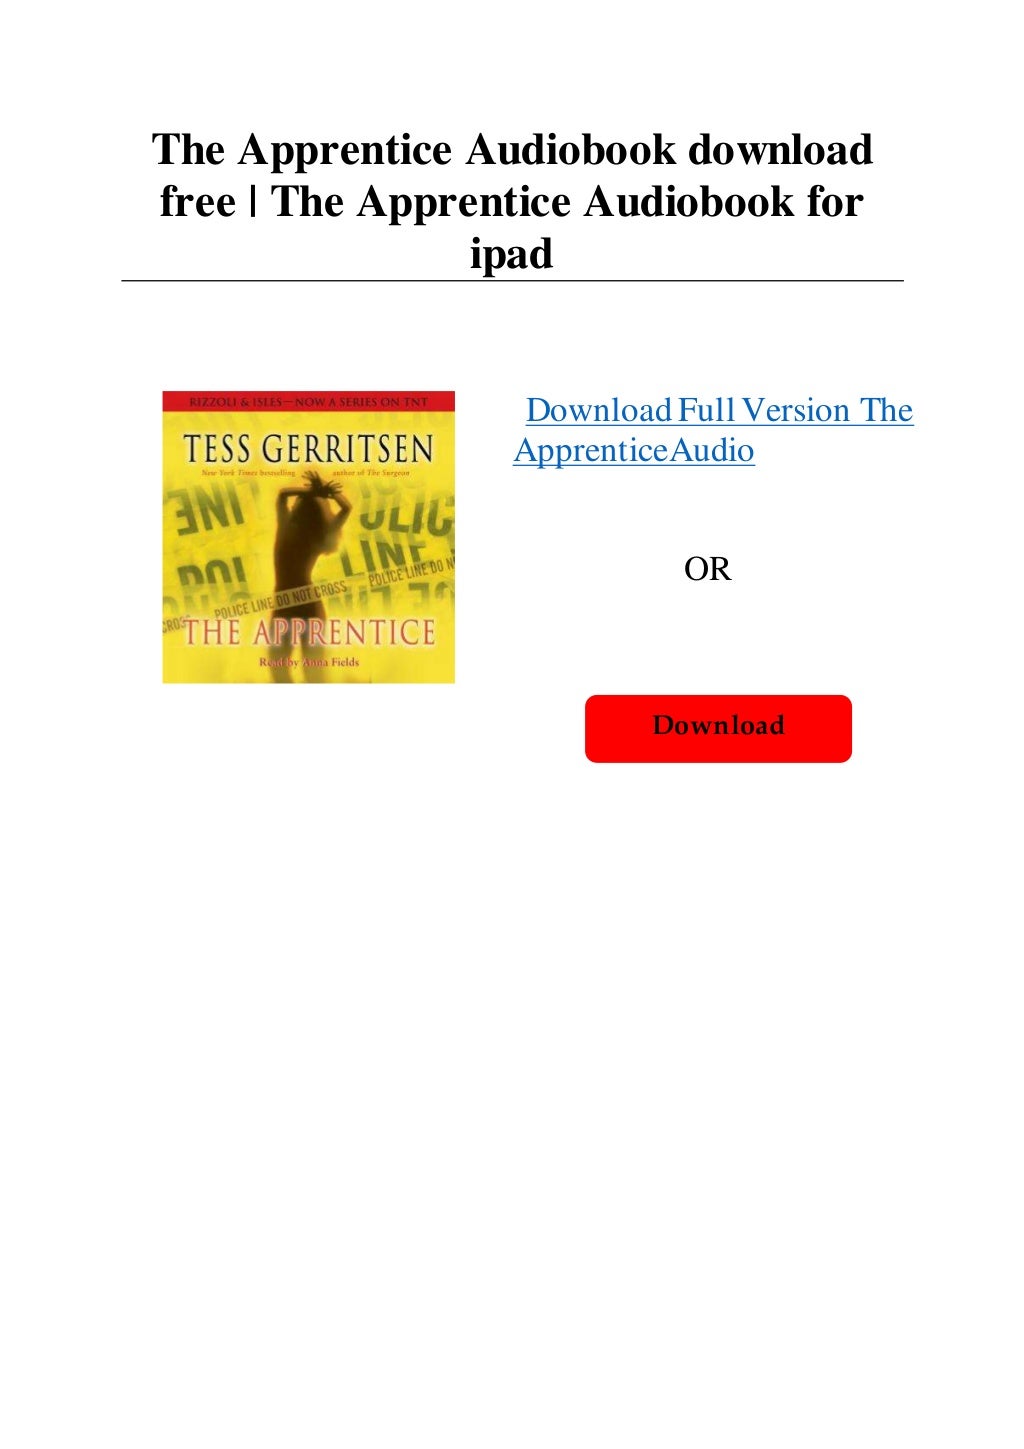 The Apprentice Audiobook download free | The Apprentice Audiobook for ipad